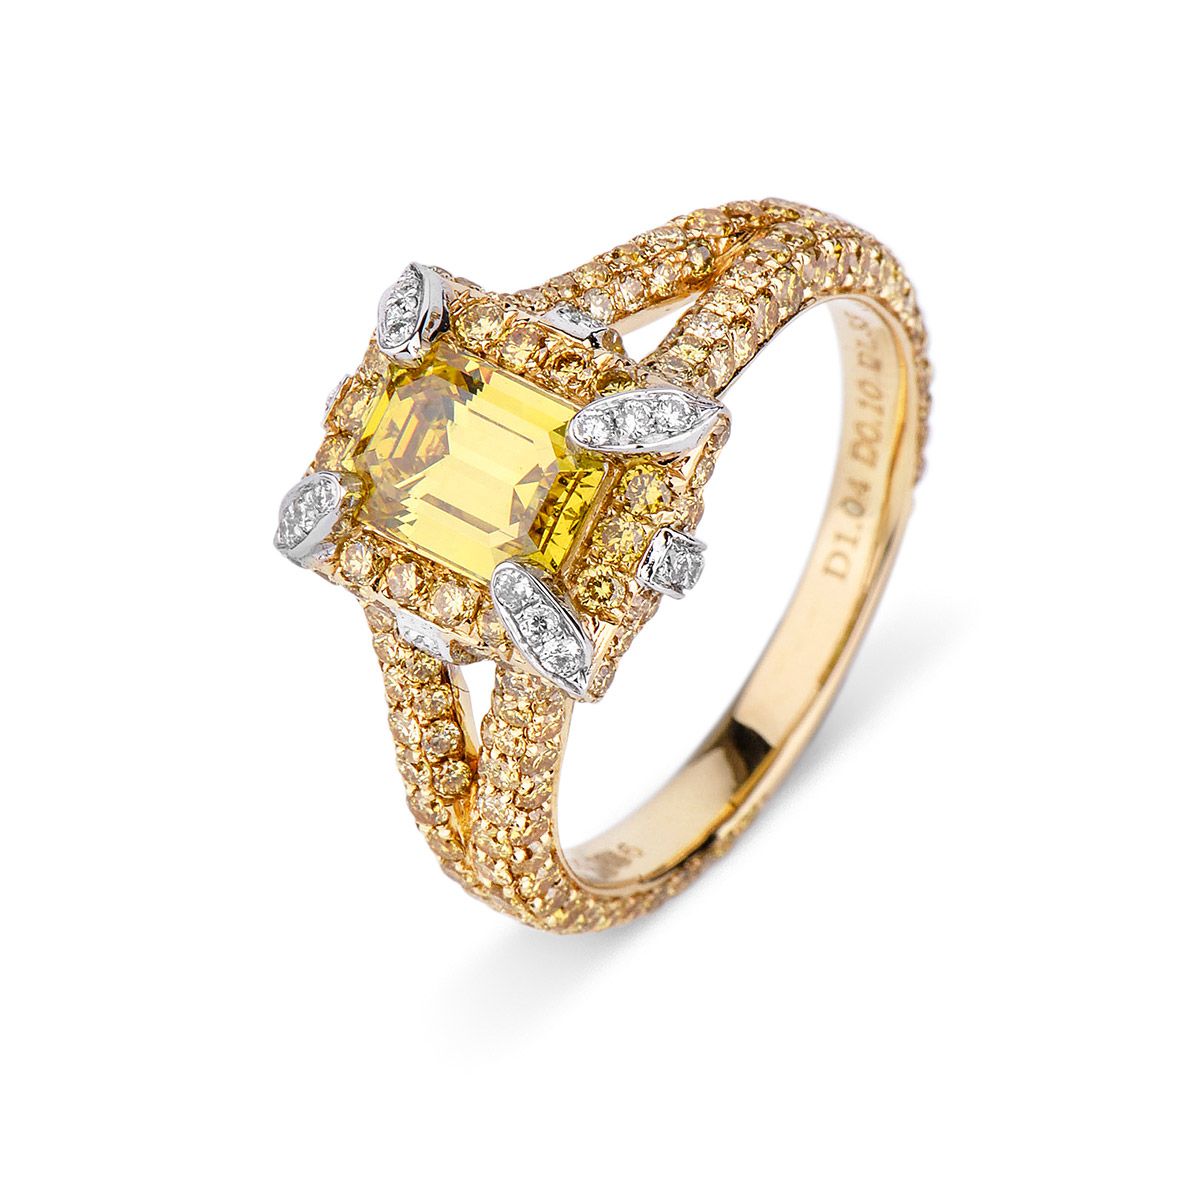 Fancy Vivid Yellow Diamond Ring, 1.43 Ct. TW, Cushion shape